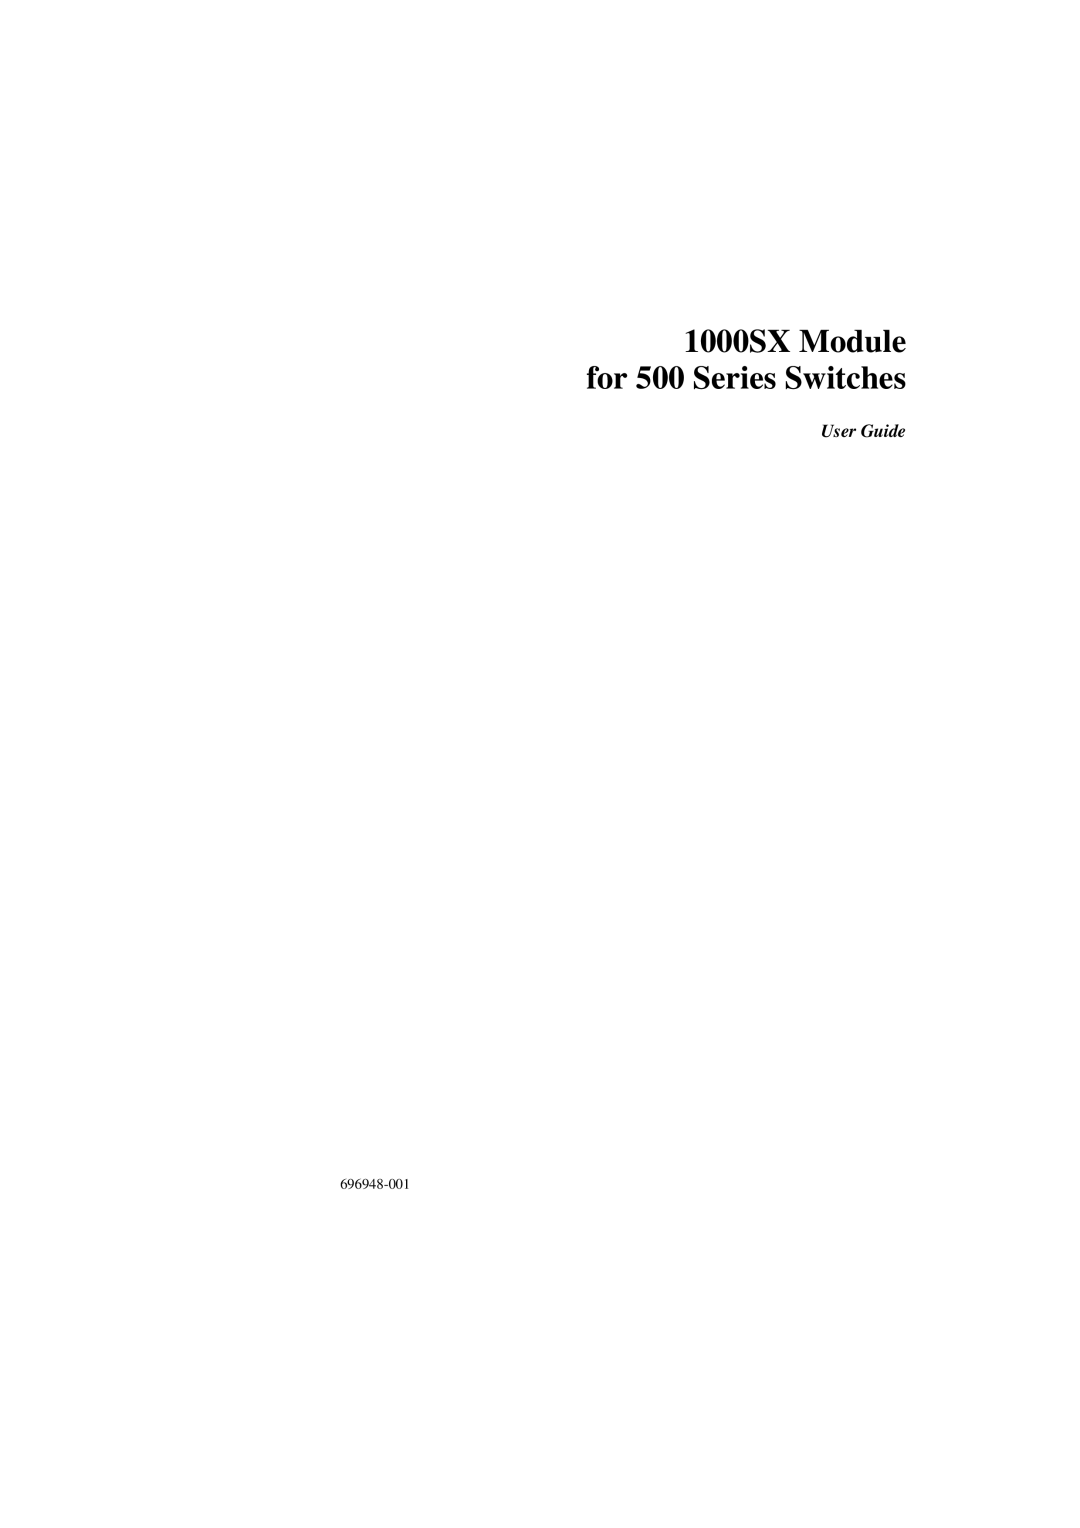 Intel manual for1000SX500SeriesAdvancedSwitchesModule, User Guide 